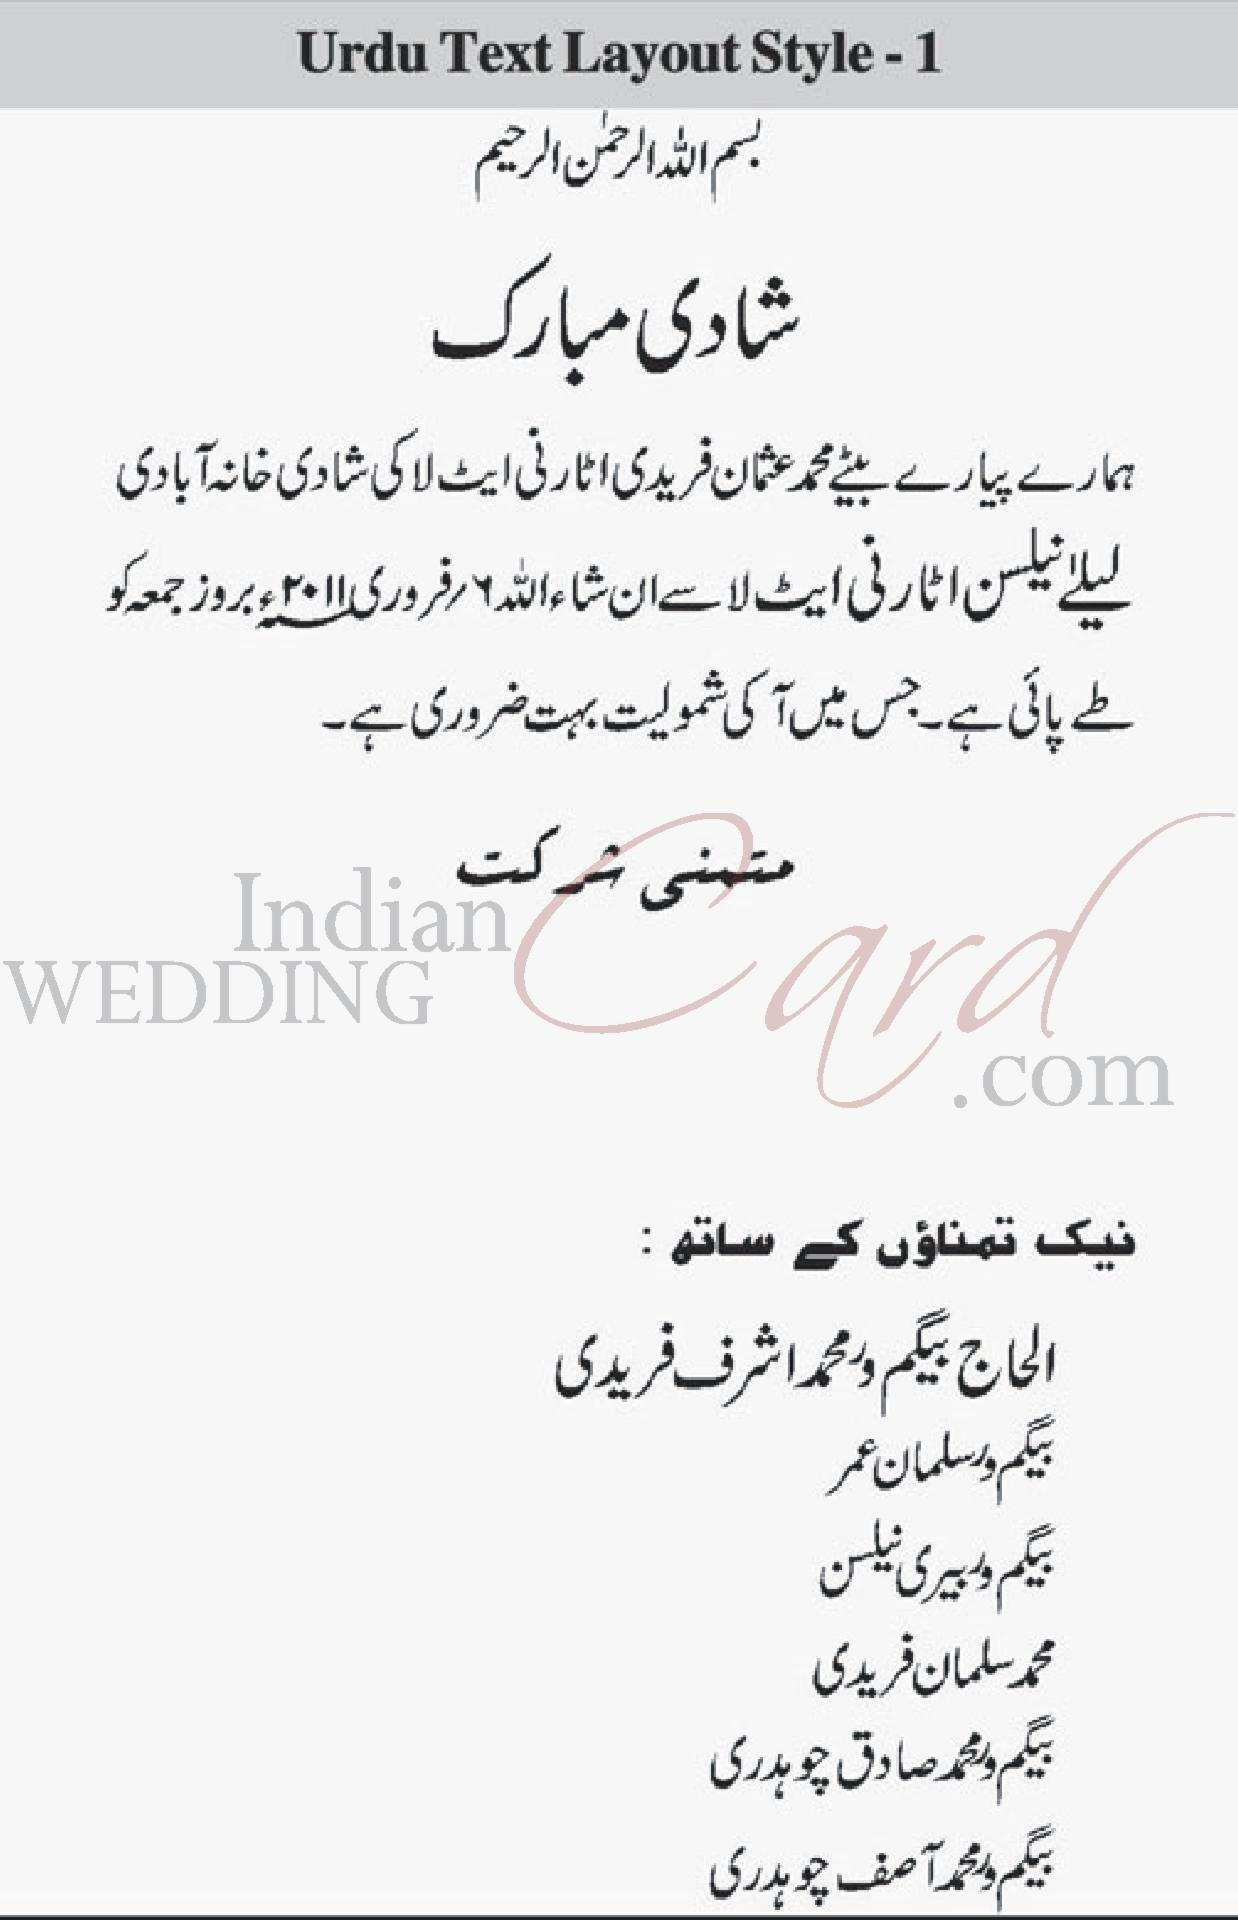 57 Creative Wedding Cards Templates In Urdu For Free for Wedding Cards Templates In Urdu